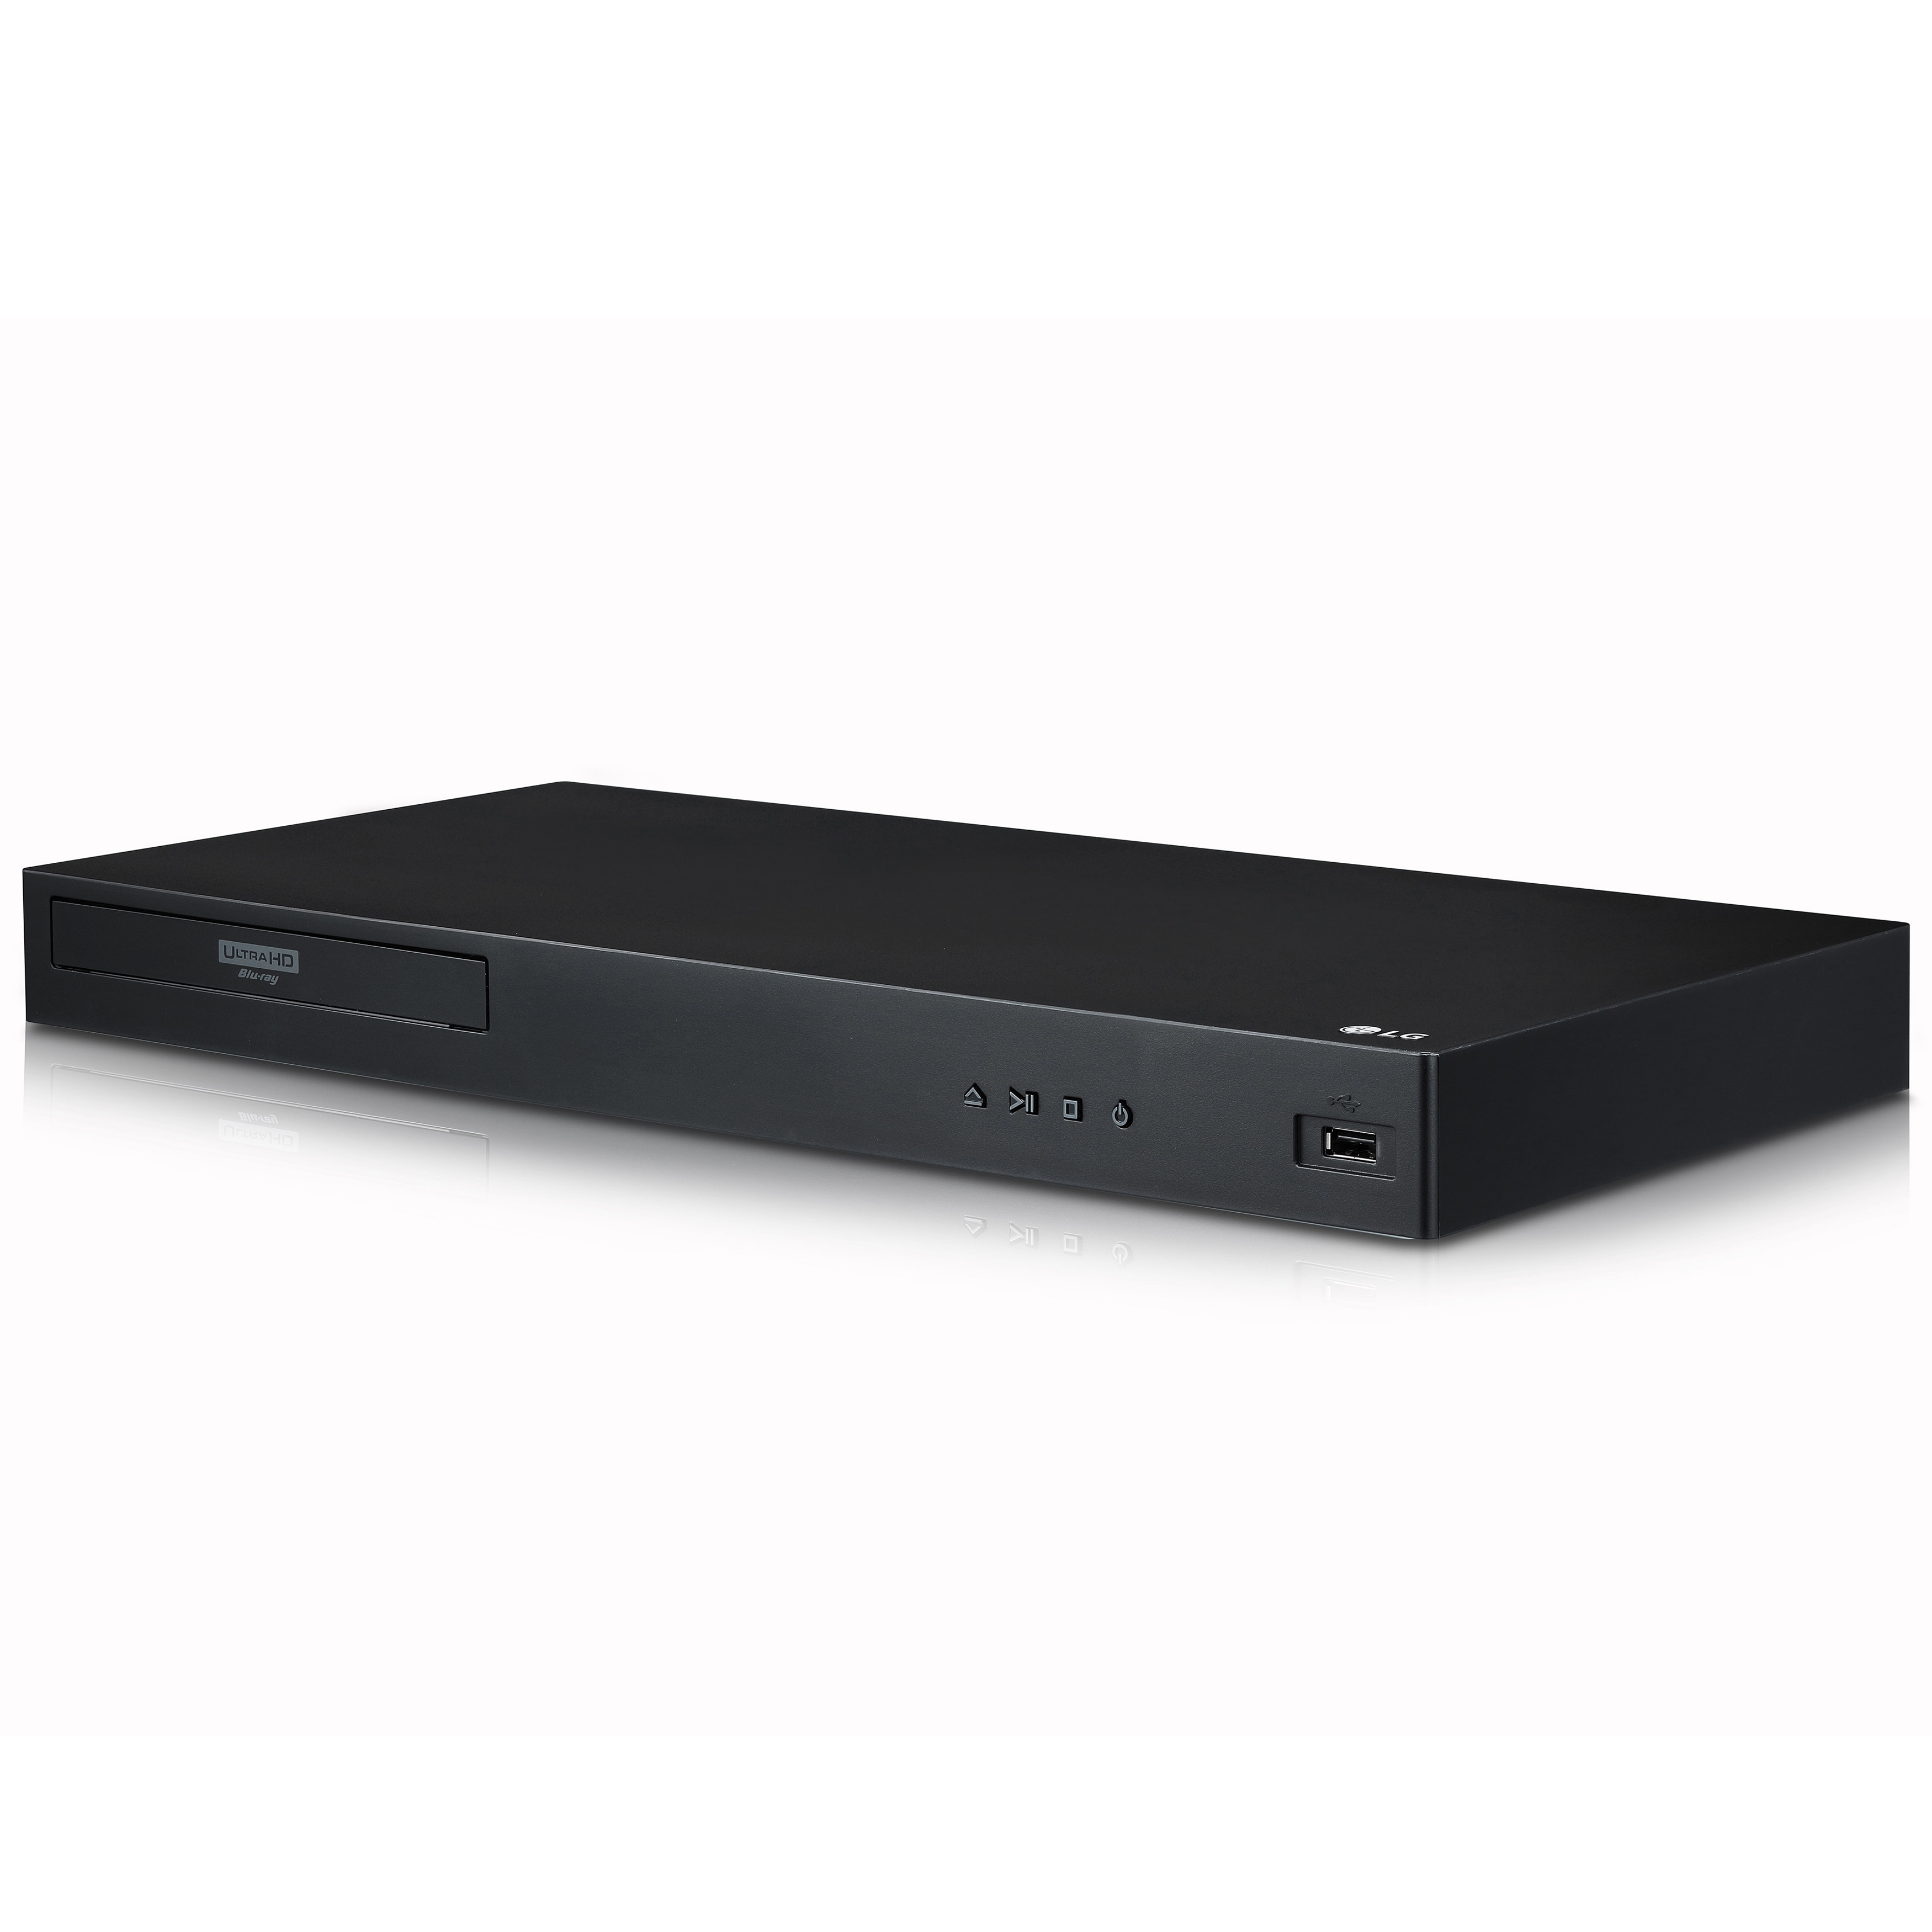 Lg 4k Ultra Hd Blu Ray Dvd Player Ubk80 Black Overstock